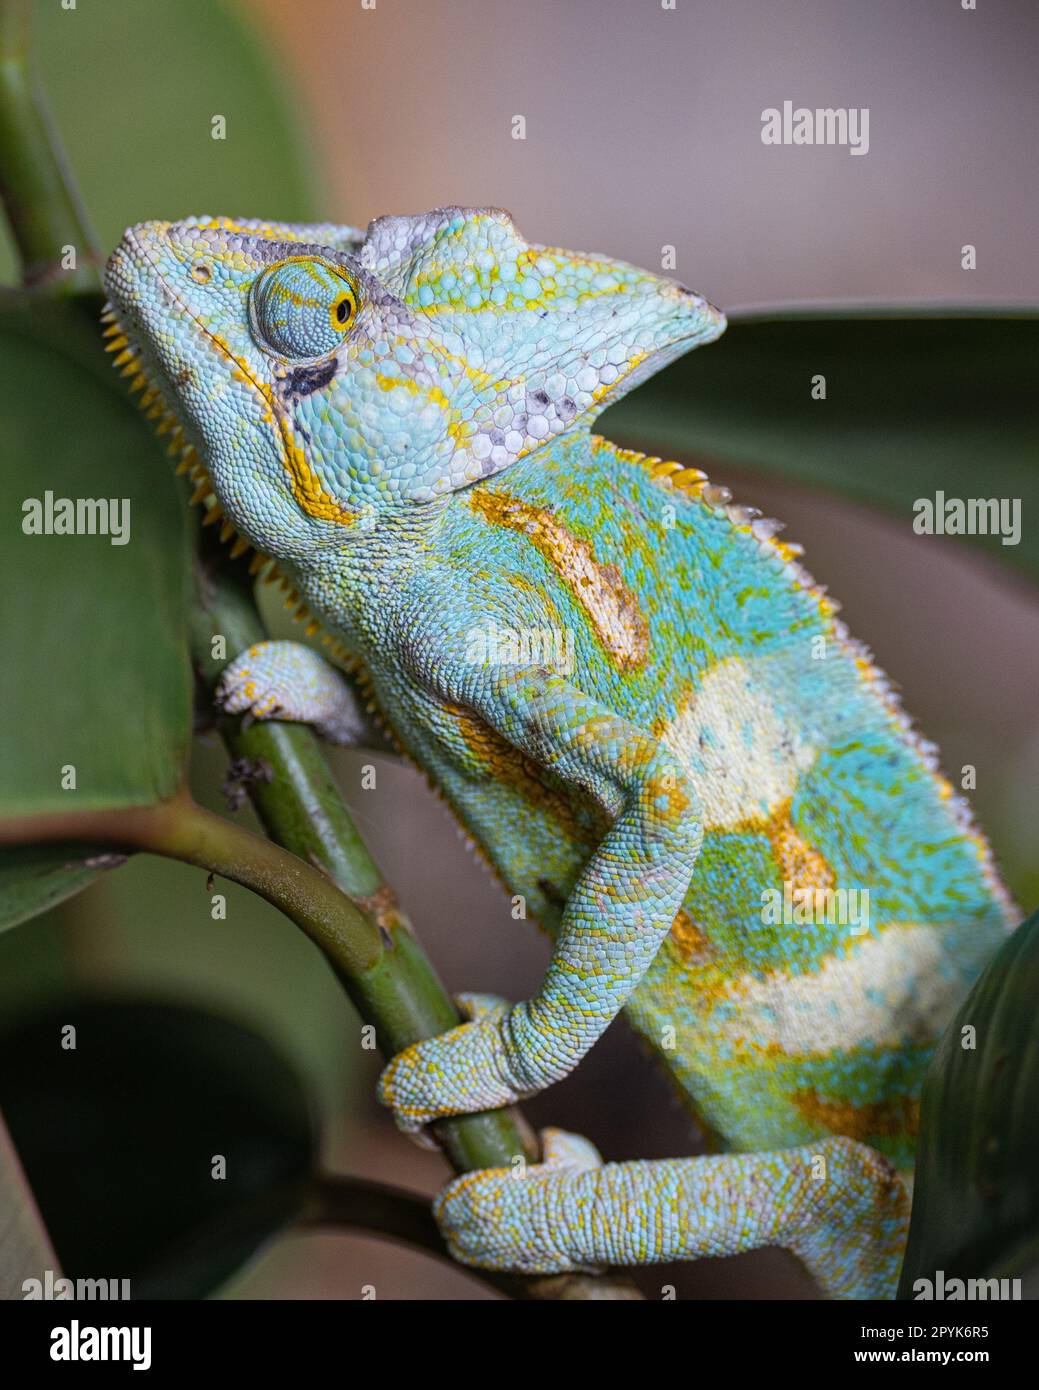 Yemen chameleon, Chamaeleo calyptratus Stock Photo